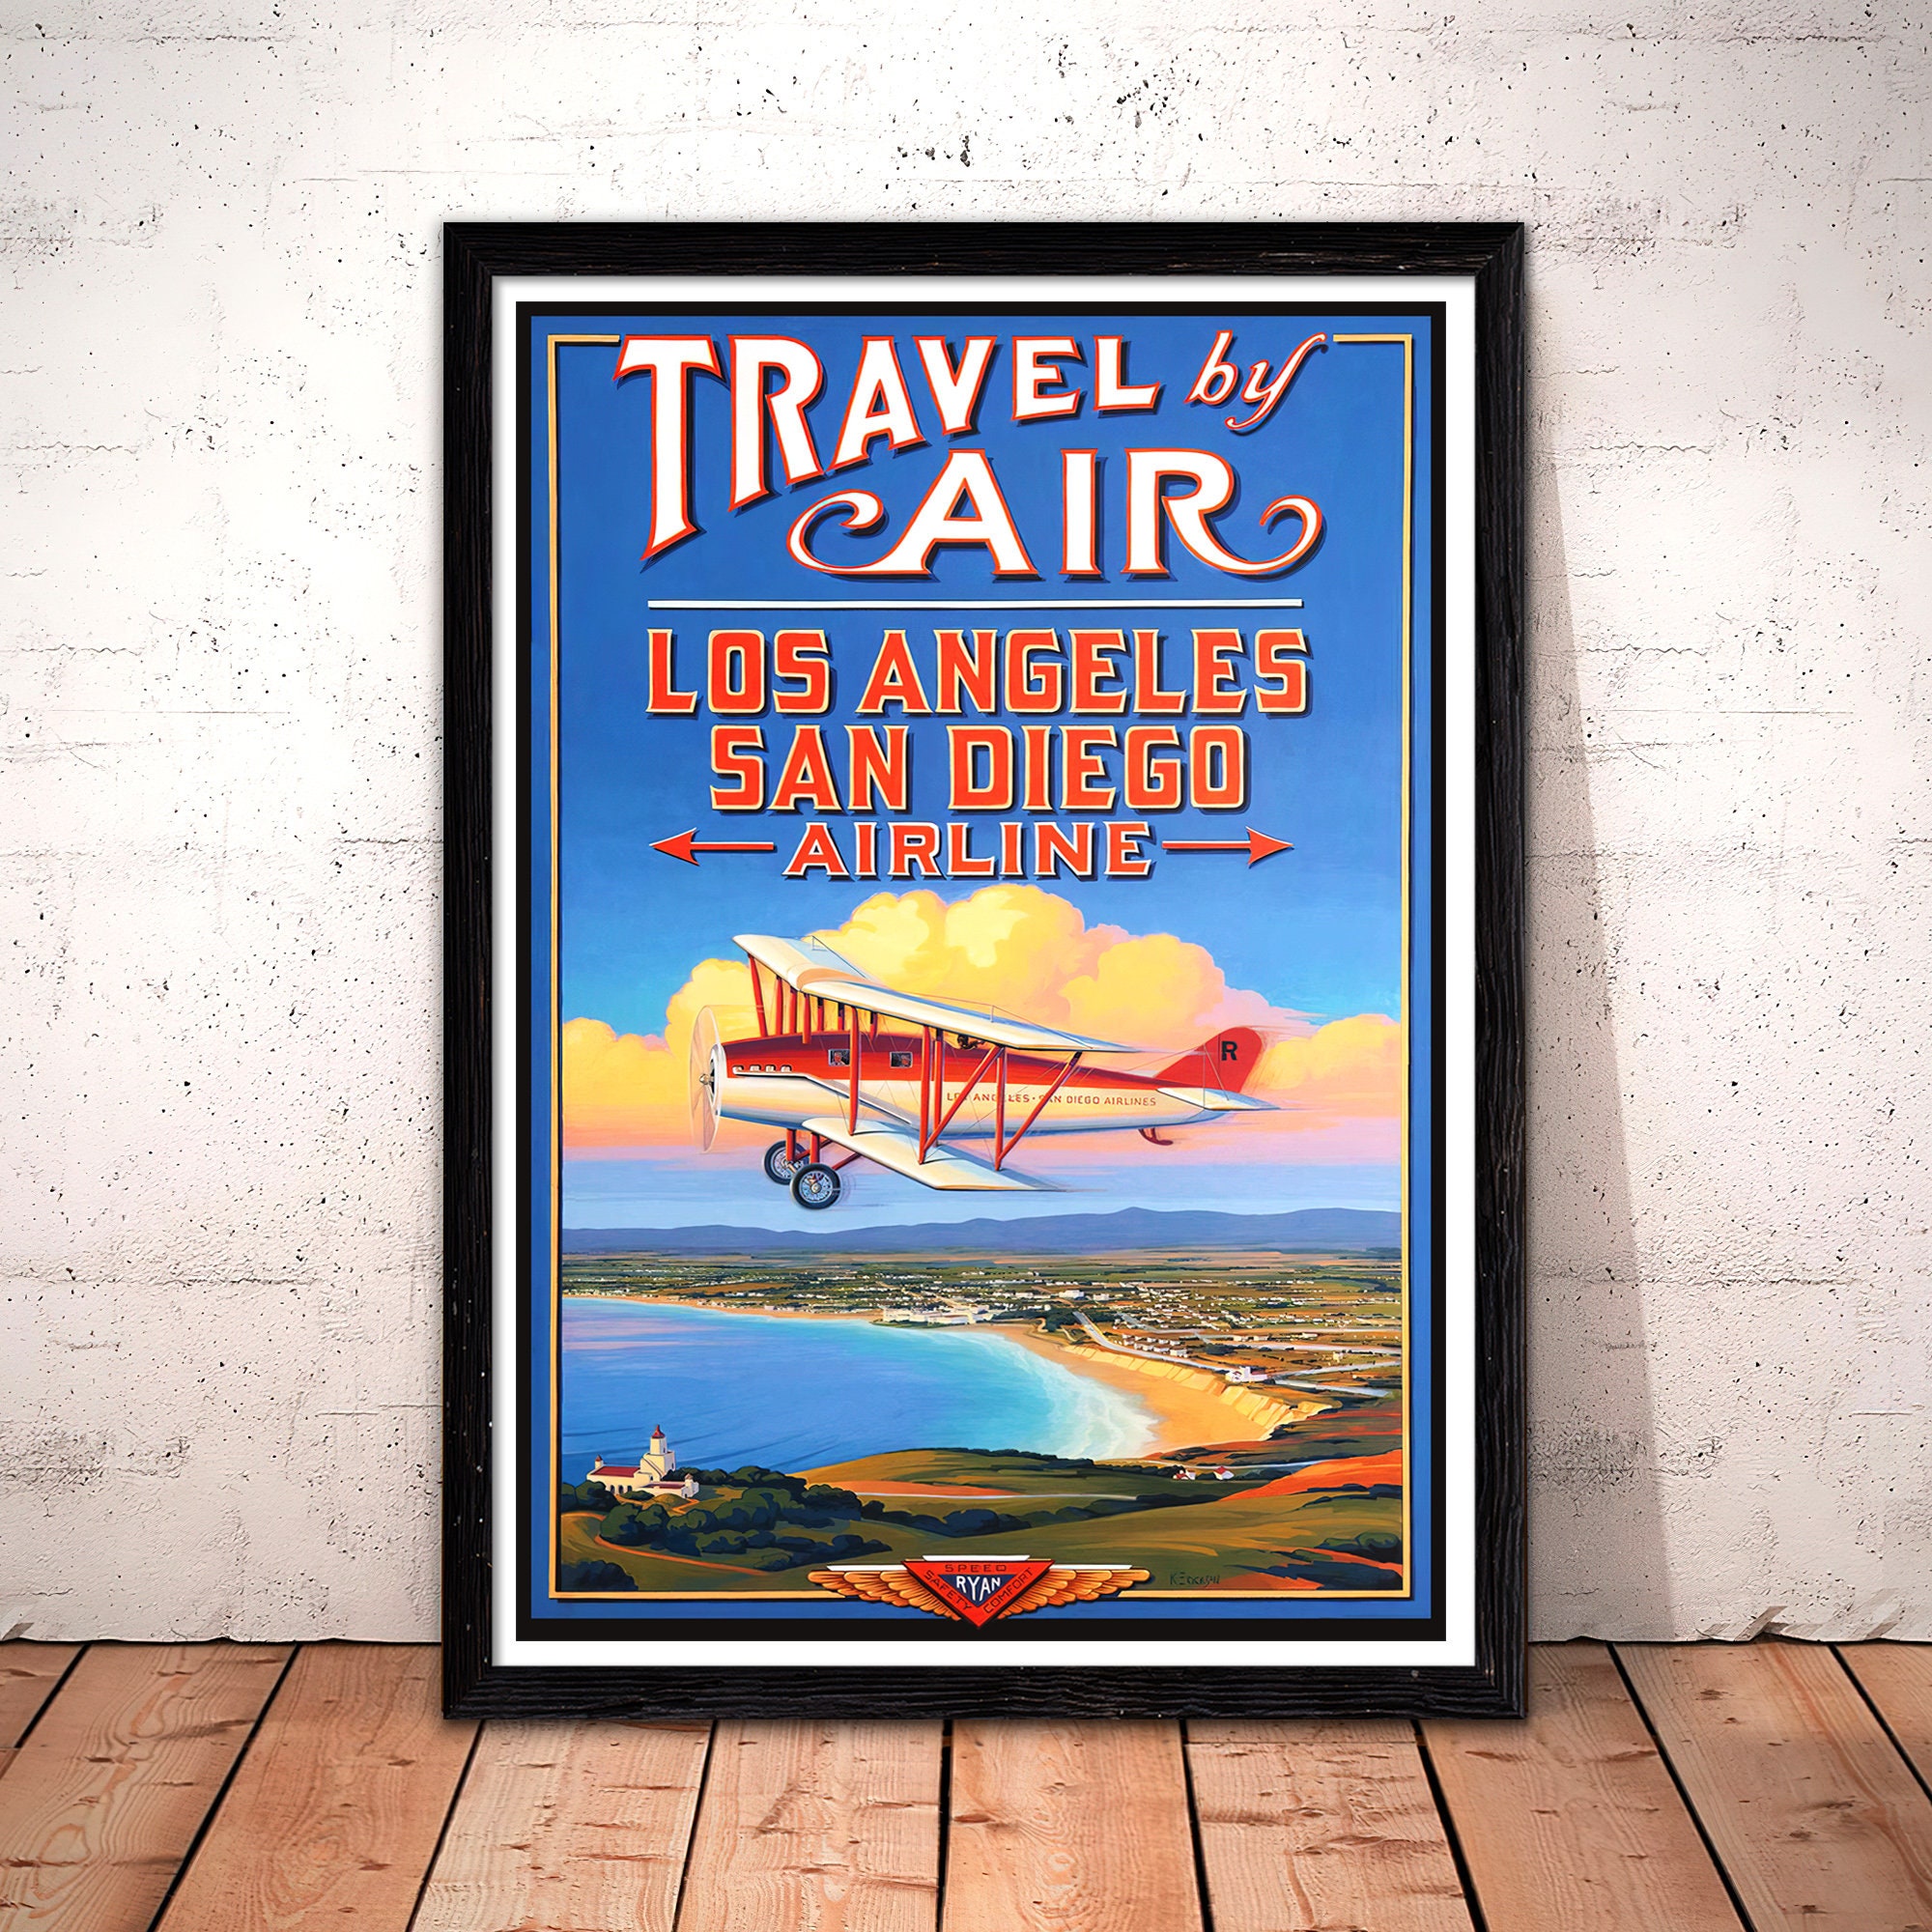 Los Angeles California Airline Kerne Erickson Vintage Style Travel Poster Print 